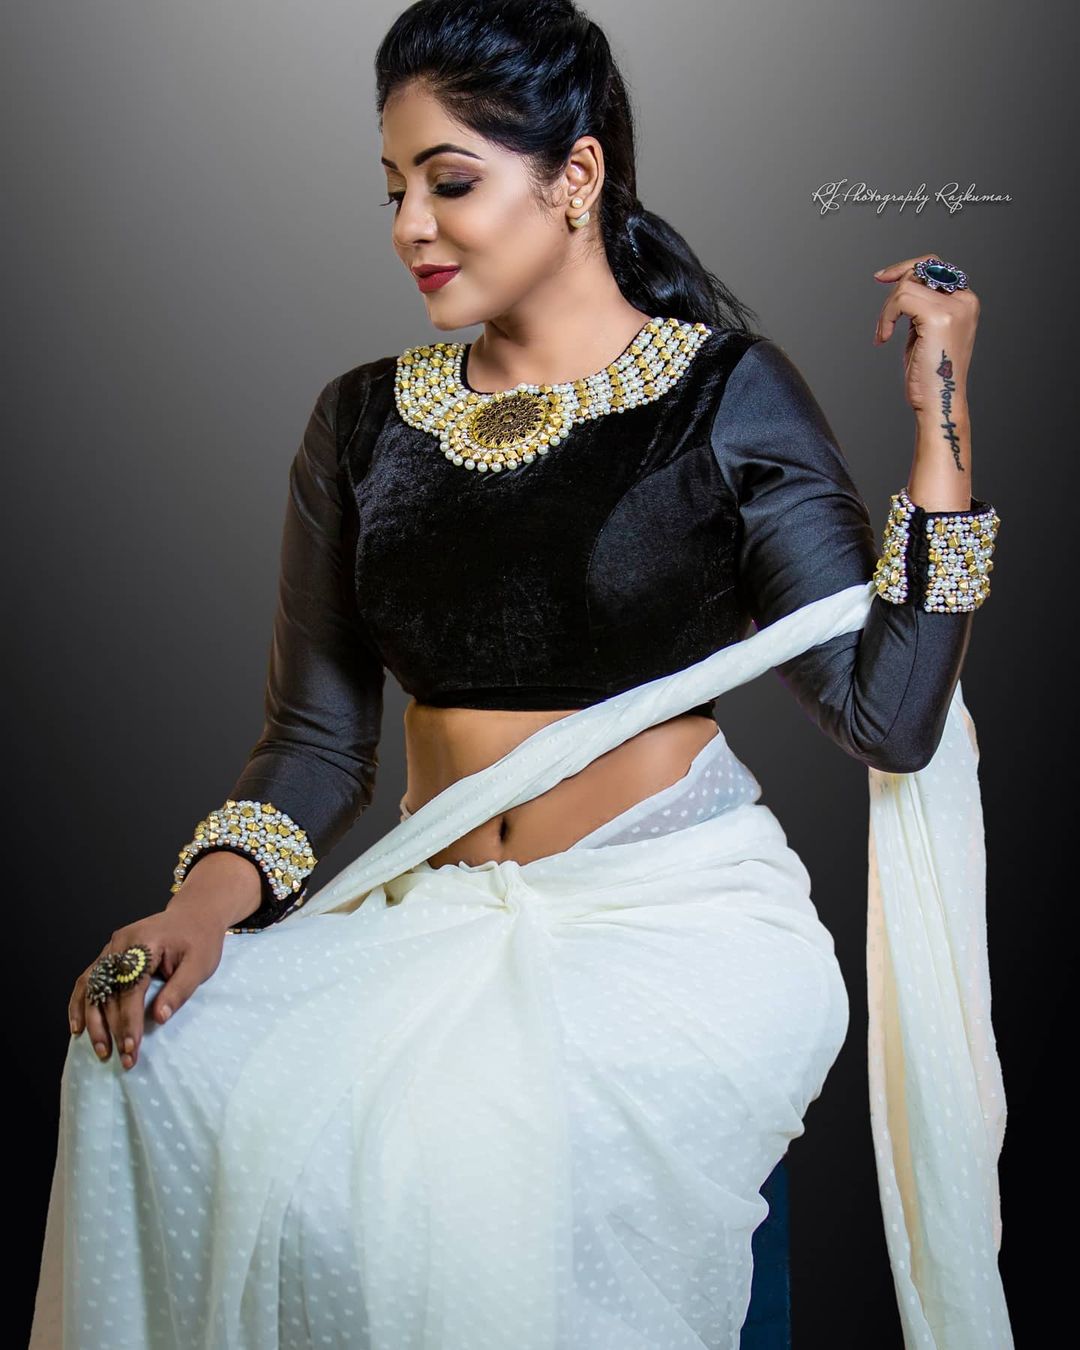 Reshma pasupuleti hot modern dress stunning photos impress fans